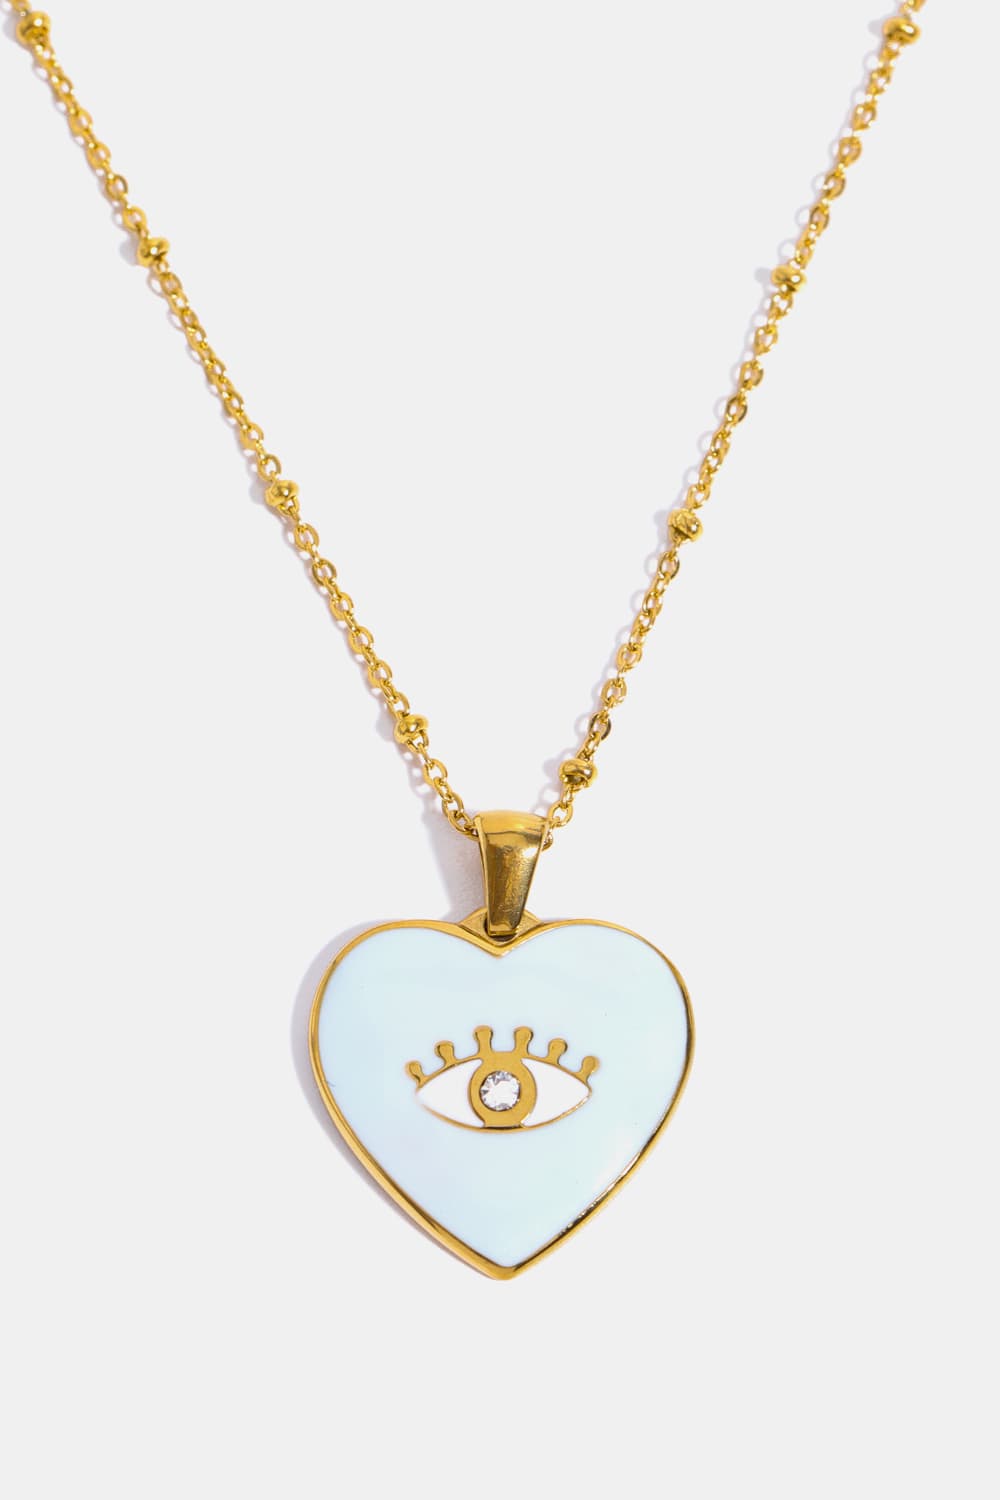 Trendsi Cupid Beauty Supplies Pastel Blue / One Size Women Necklace Heart & Evil Eye Shape 18K Gold Plated Pendant Necklace